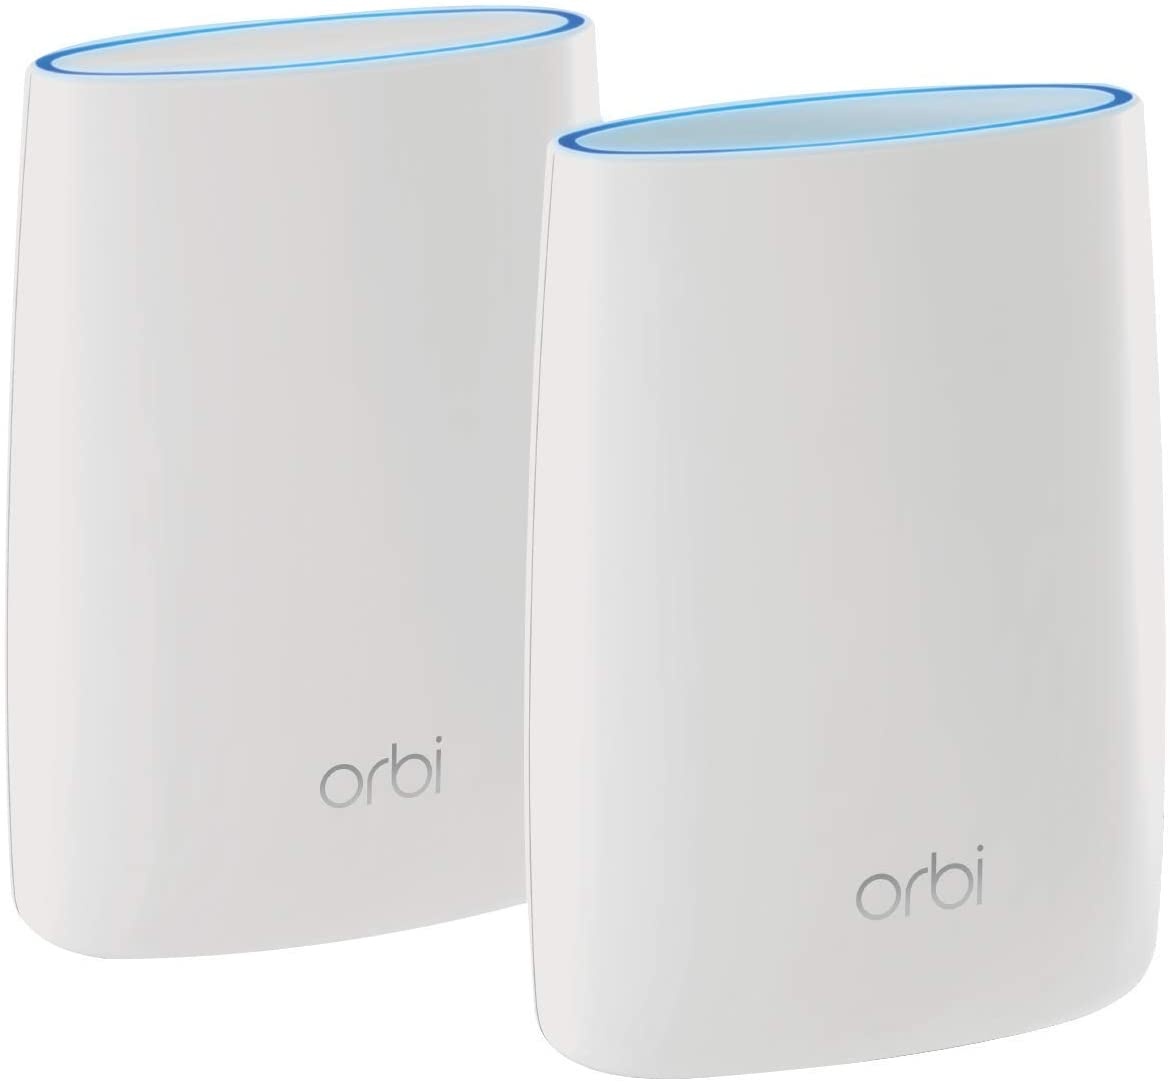 NetGear Orbi WiFi System (RBK50) Review